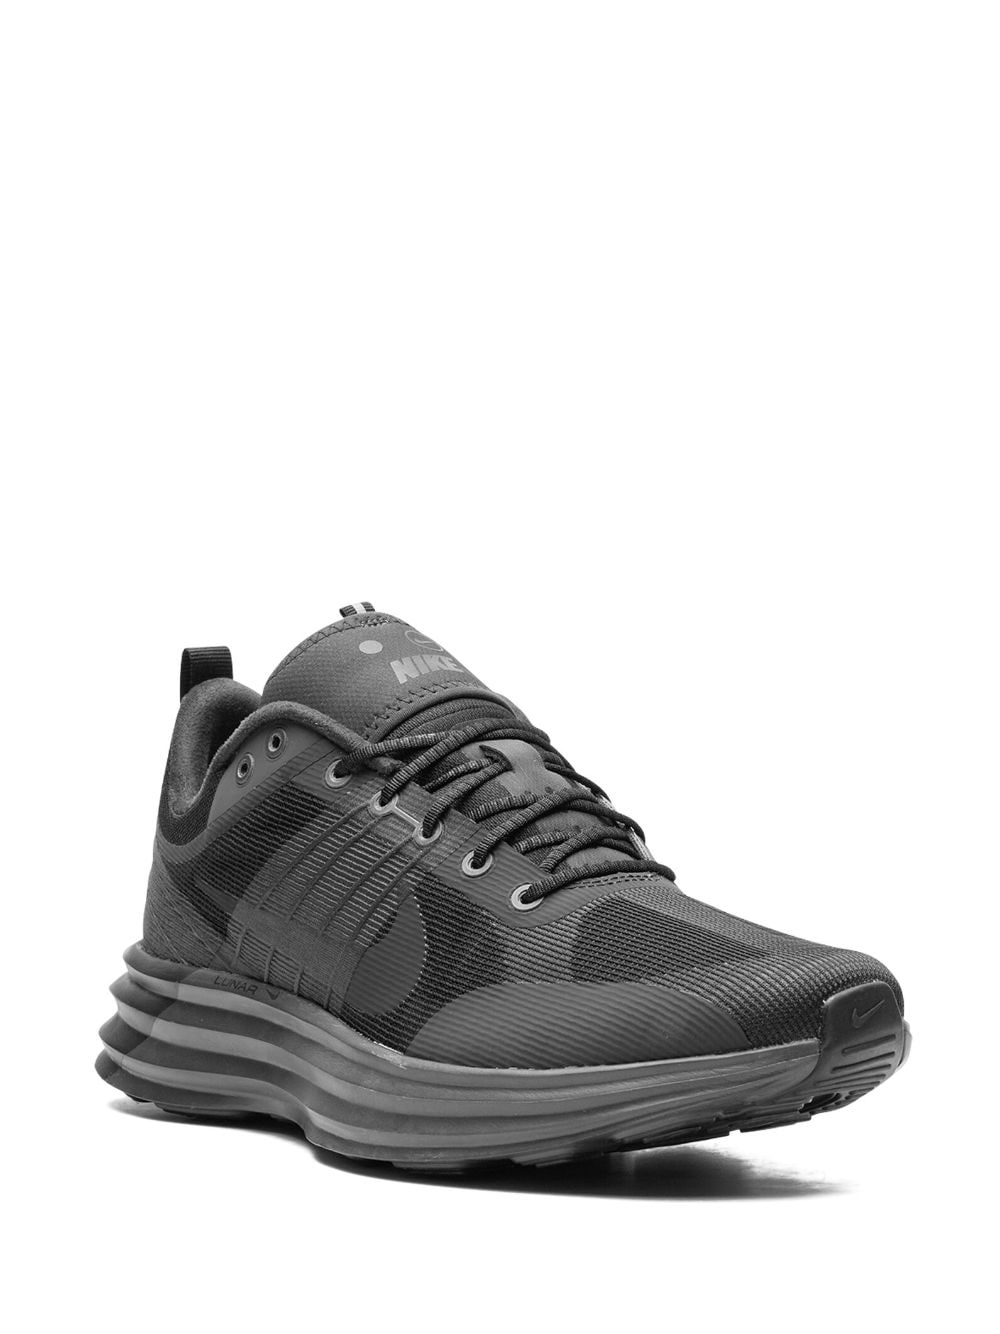 Image 2 of Nike Lunar Roam "Dark Smoke Grey/Anthacite Black" Sneakers